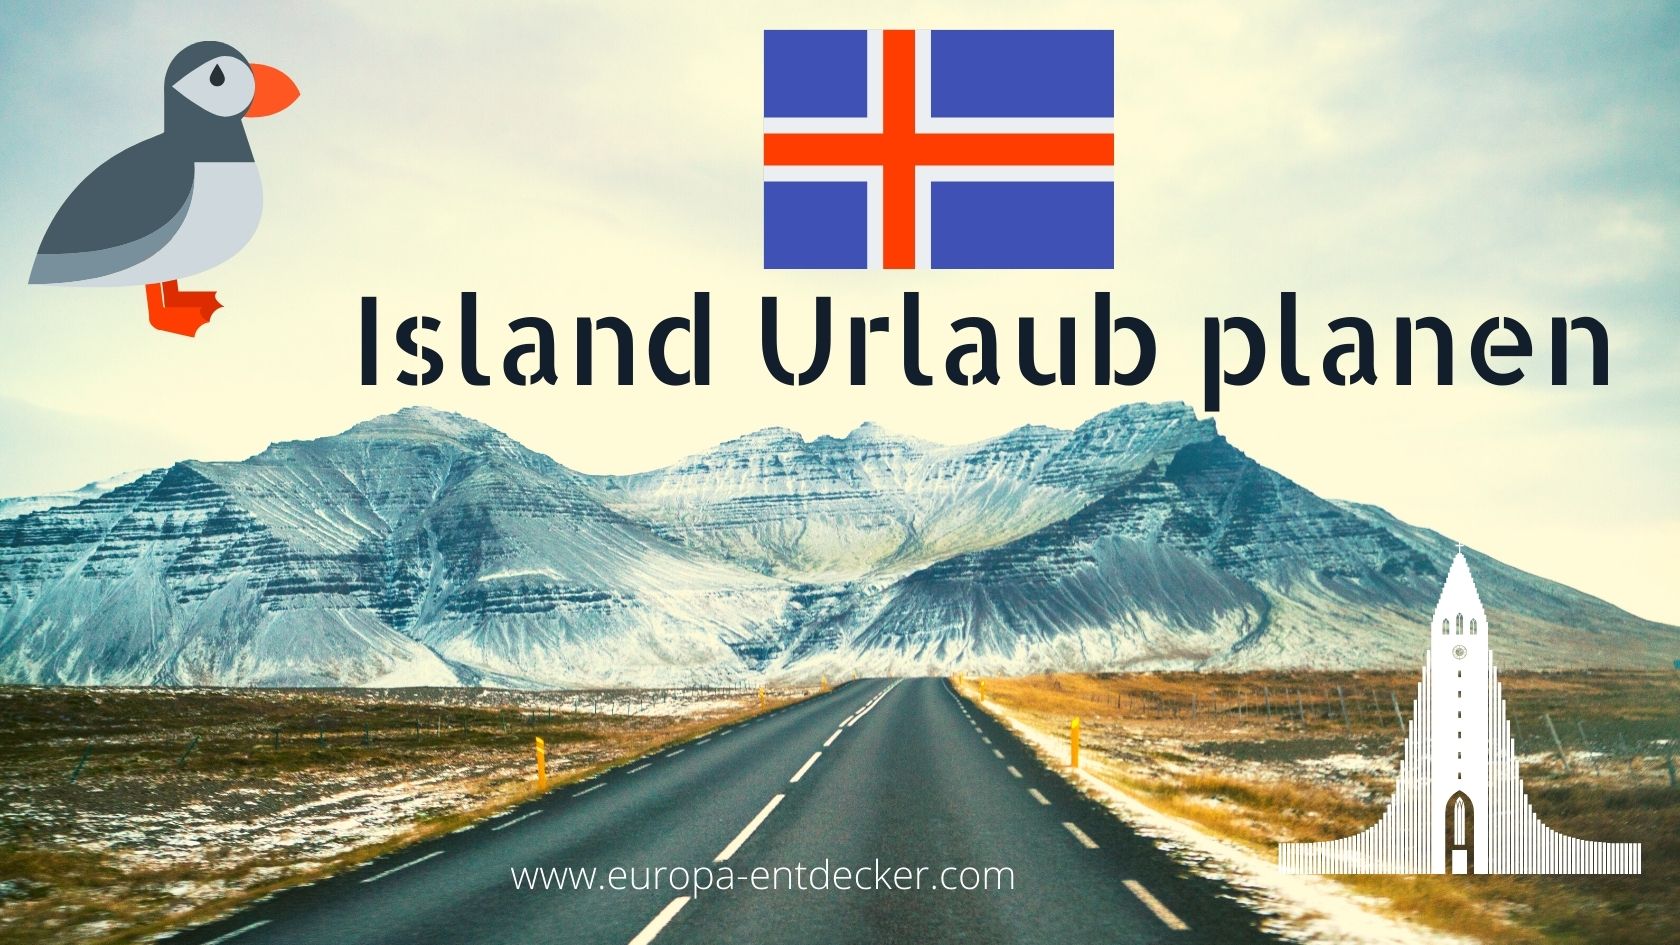 Island Urlaub planen